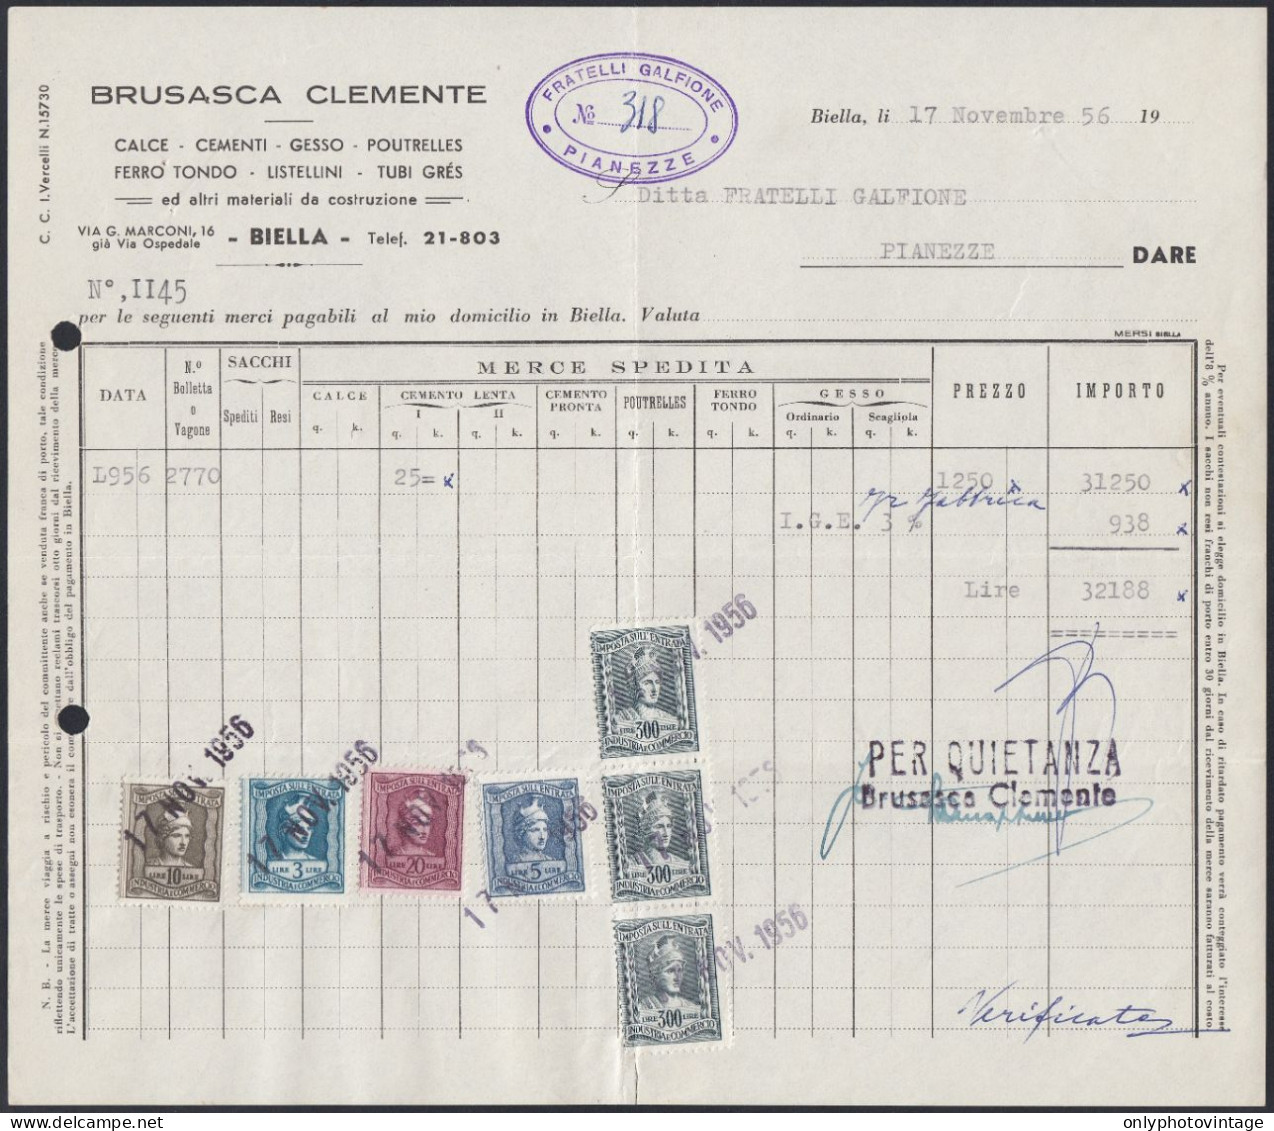 Biella 1956 - Brusasca Clemente - Materiale Da Costruzione - Fattura - Italy